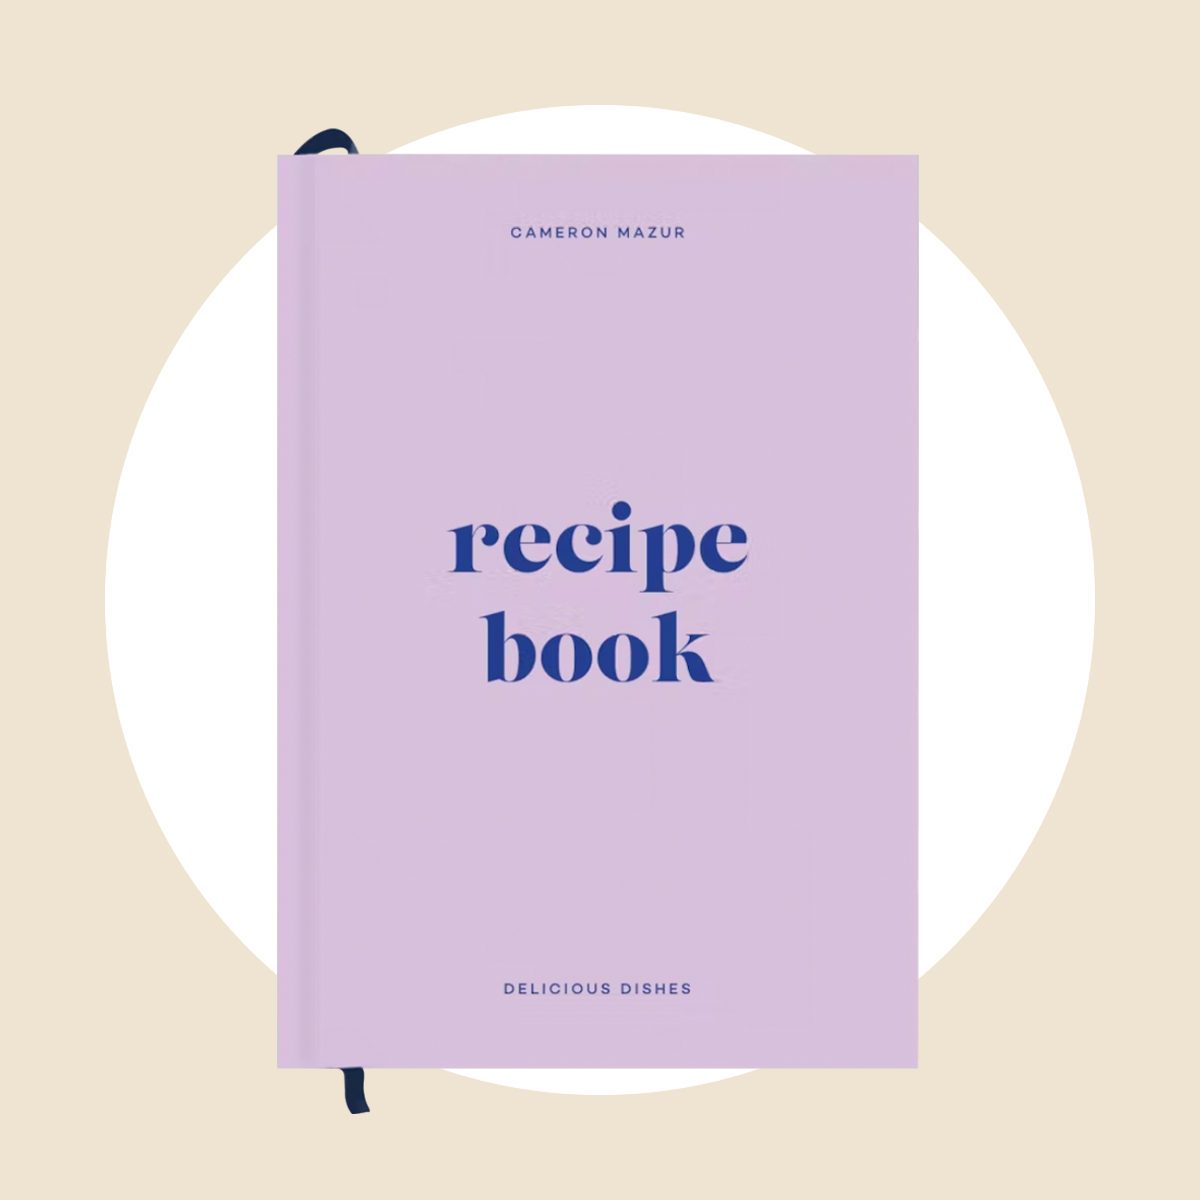 Blank Recipe Notebook Large Recipe Book Kitchen Utensils Recipe